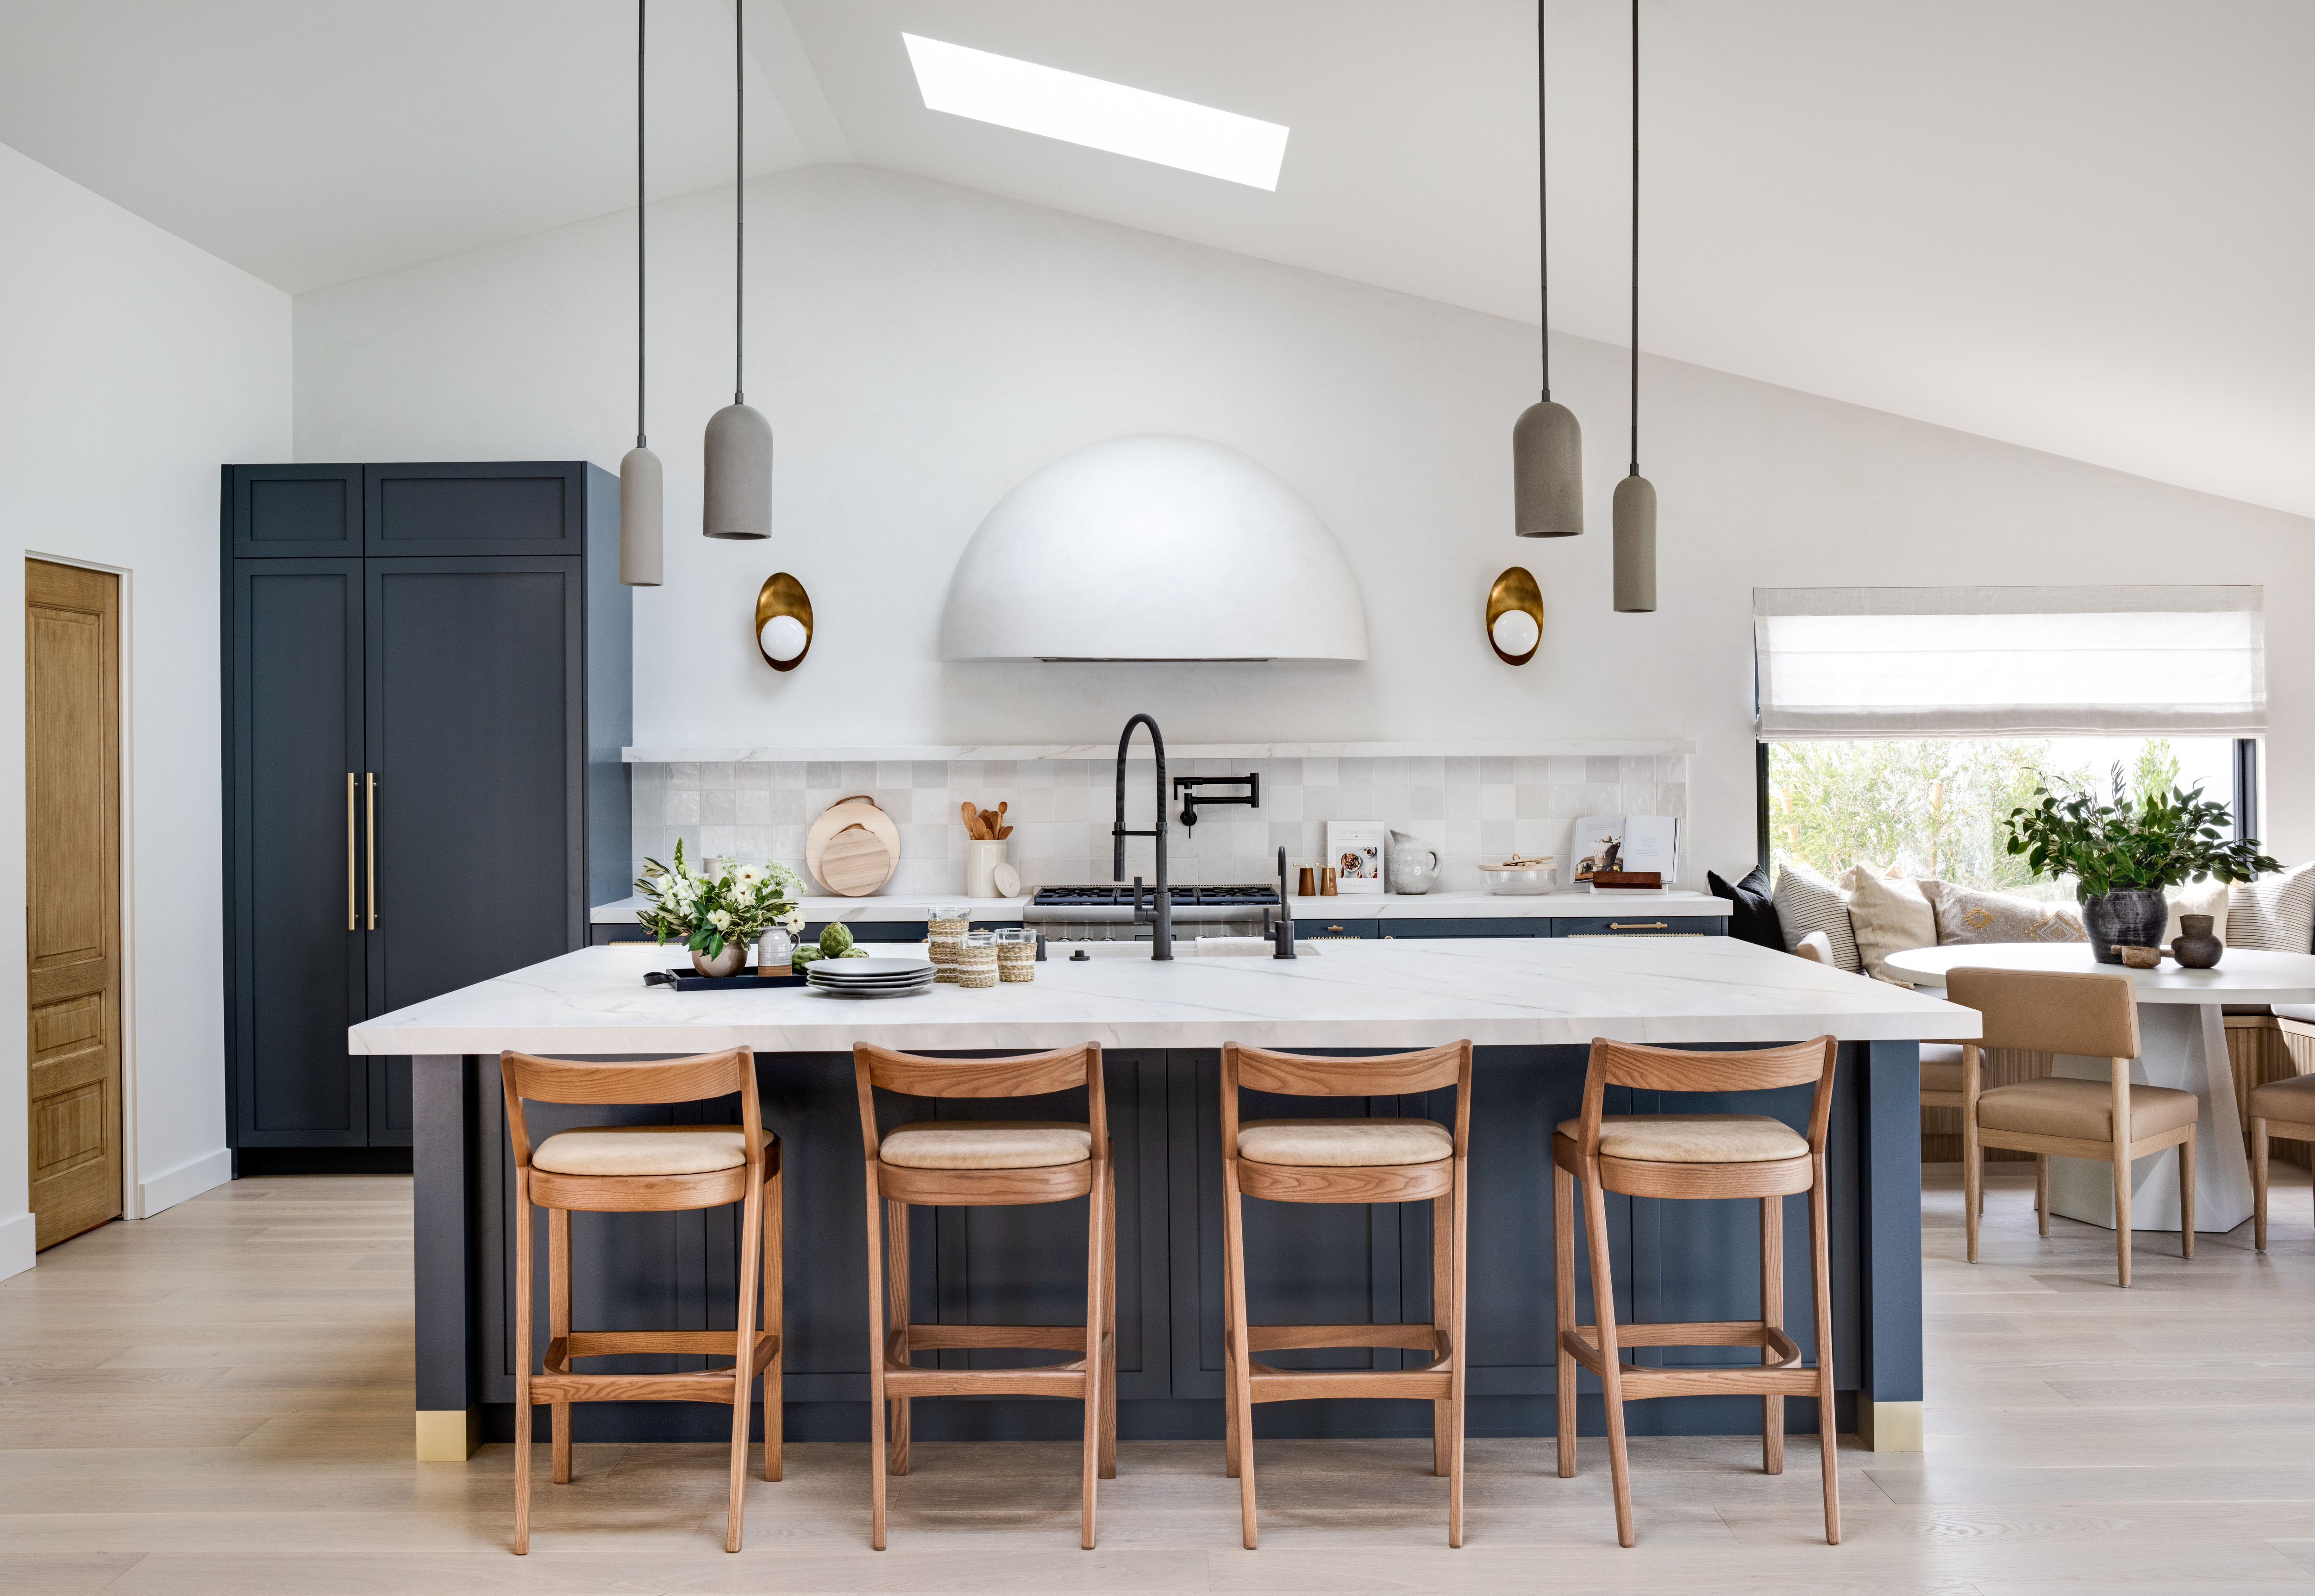 Kitchen island ideas – 20 ways to design the perfect kitchen ...